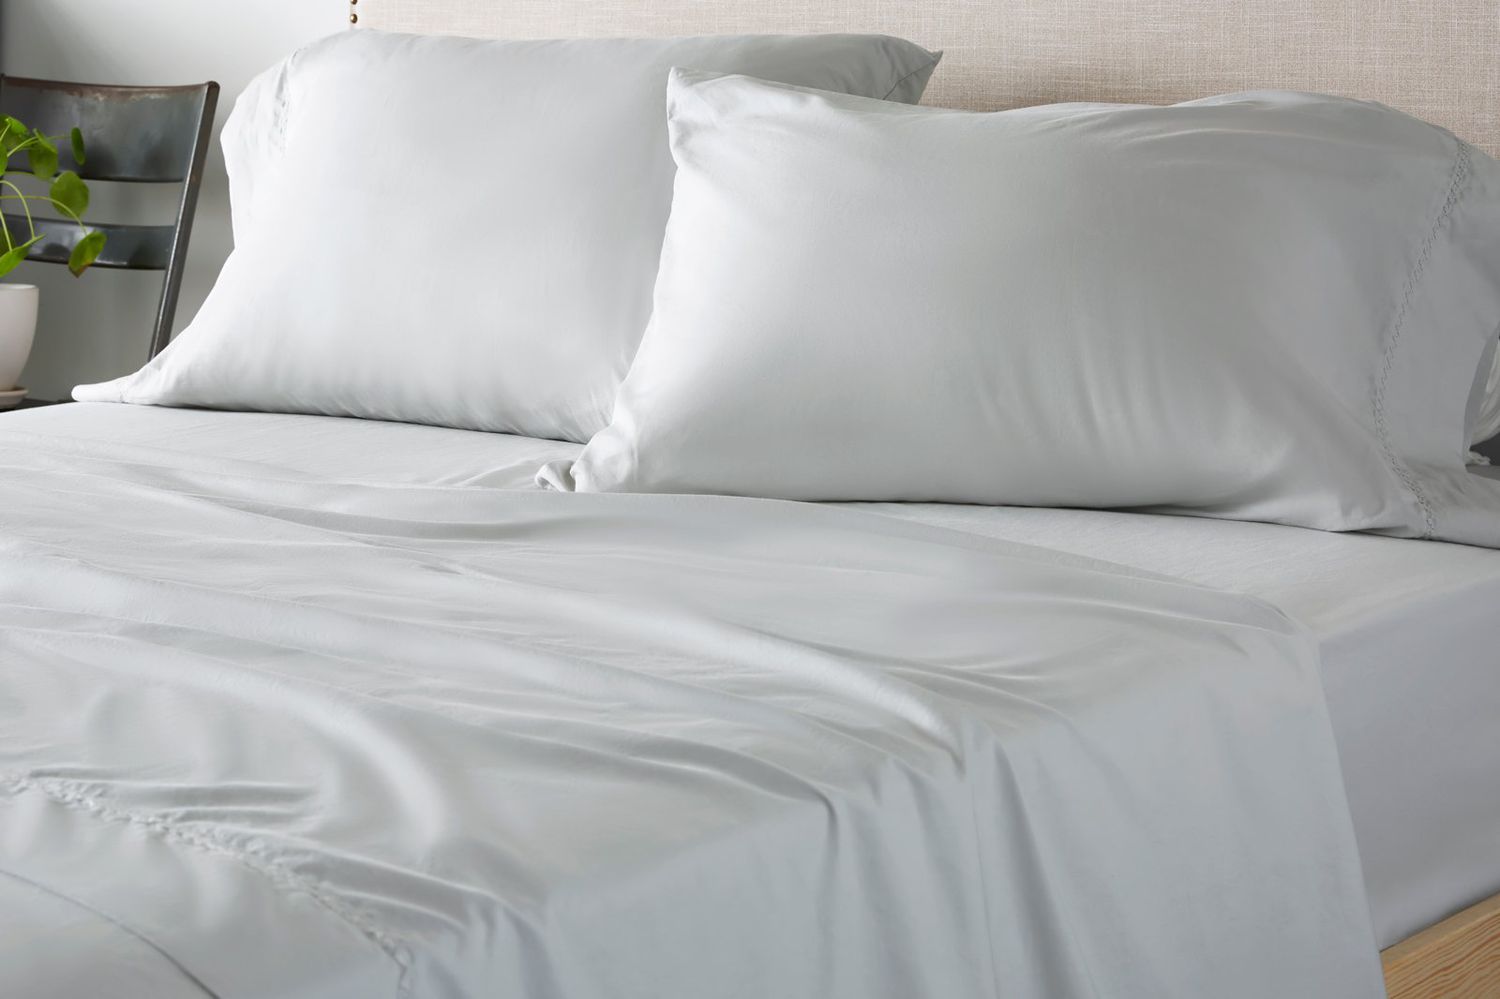 Allswell Bedding light gray sheets